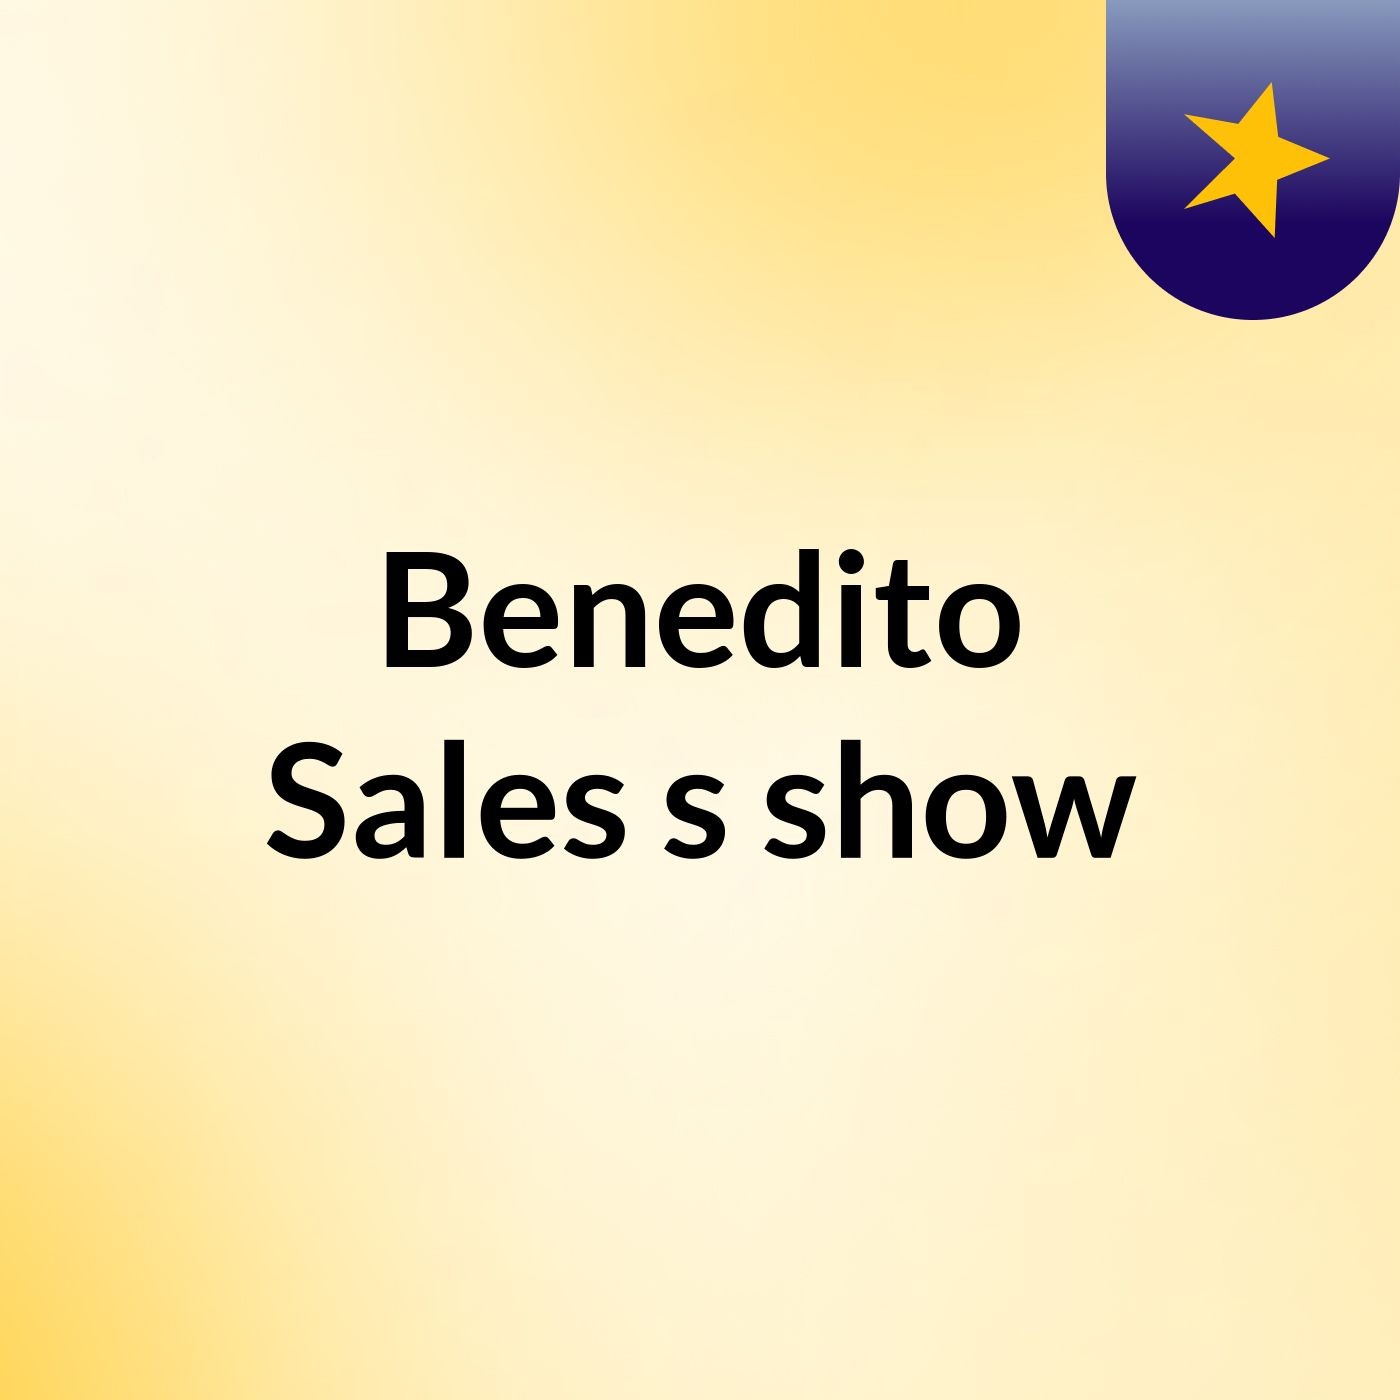 Benedito Sales's show